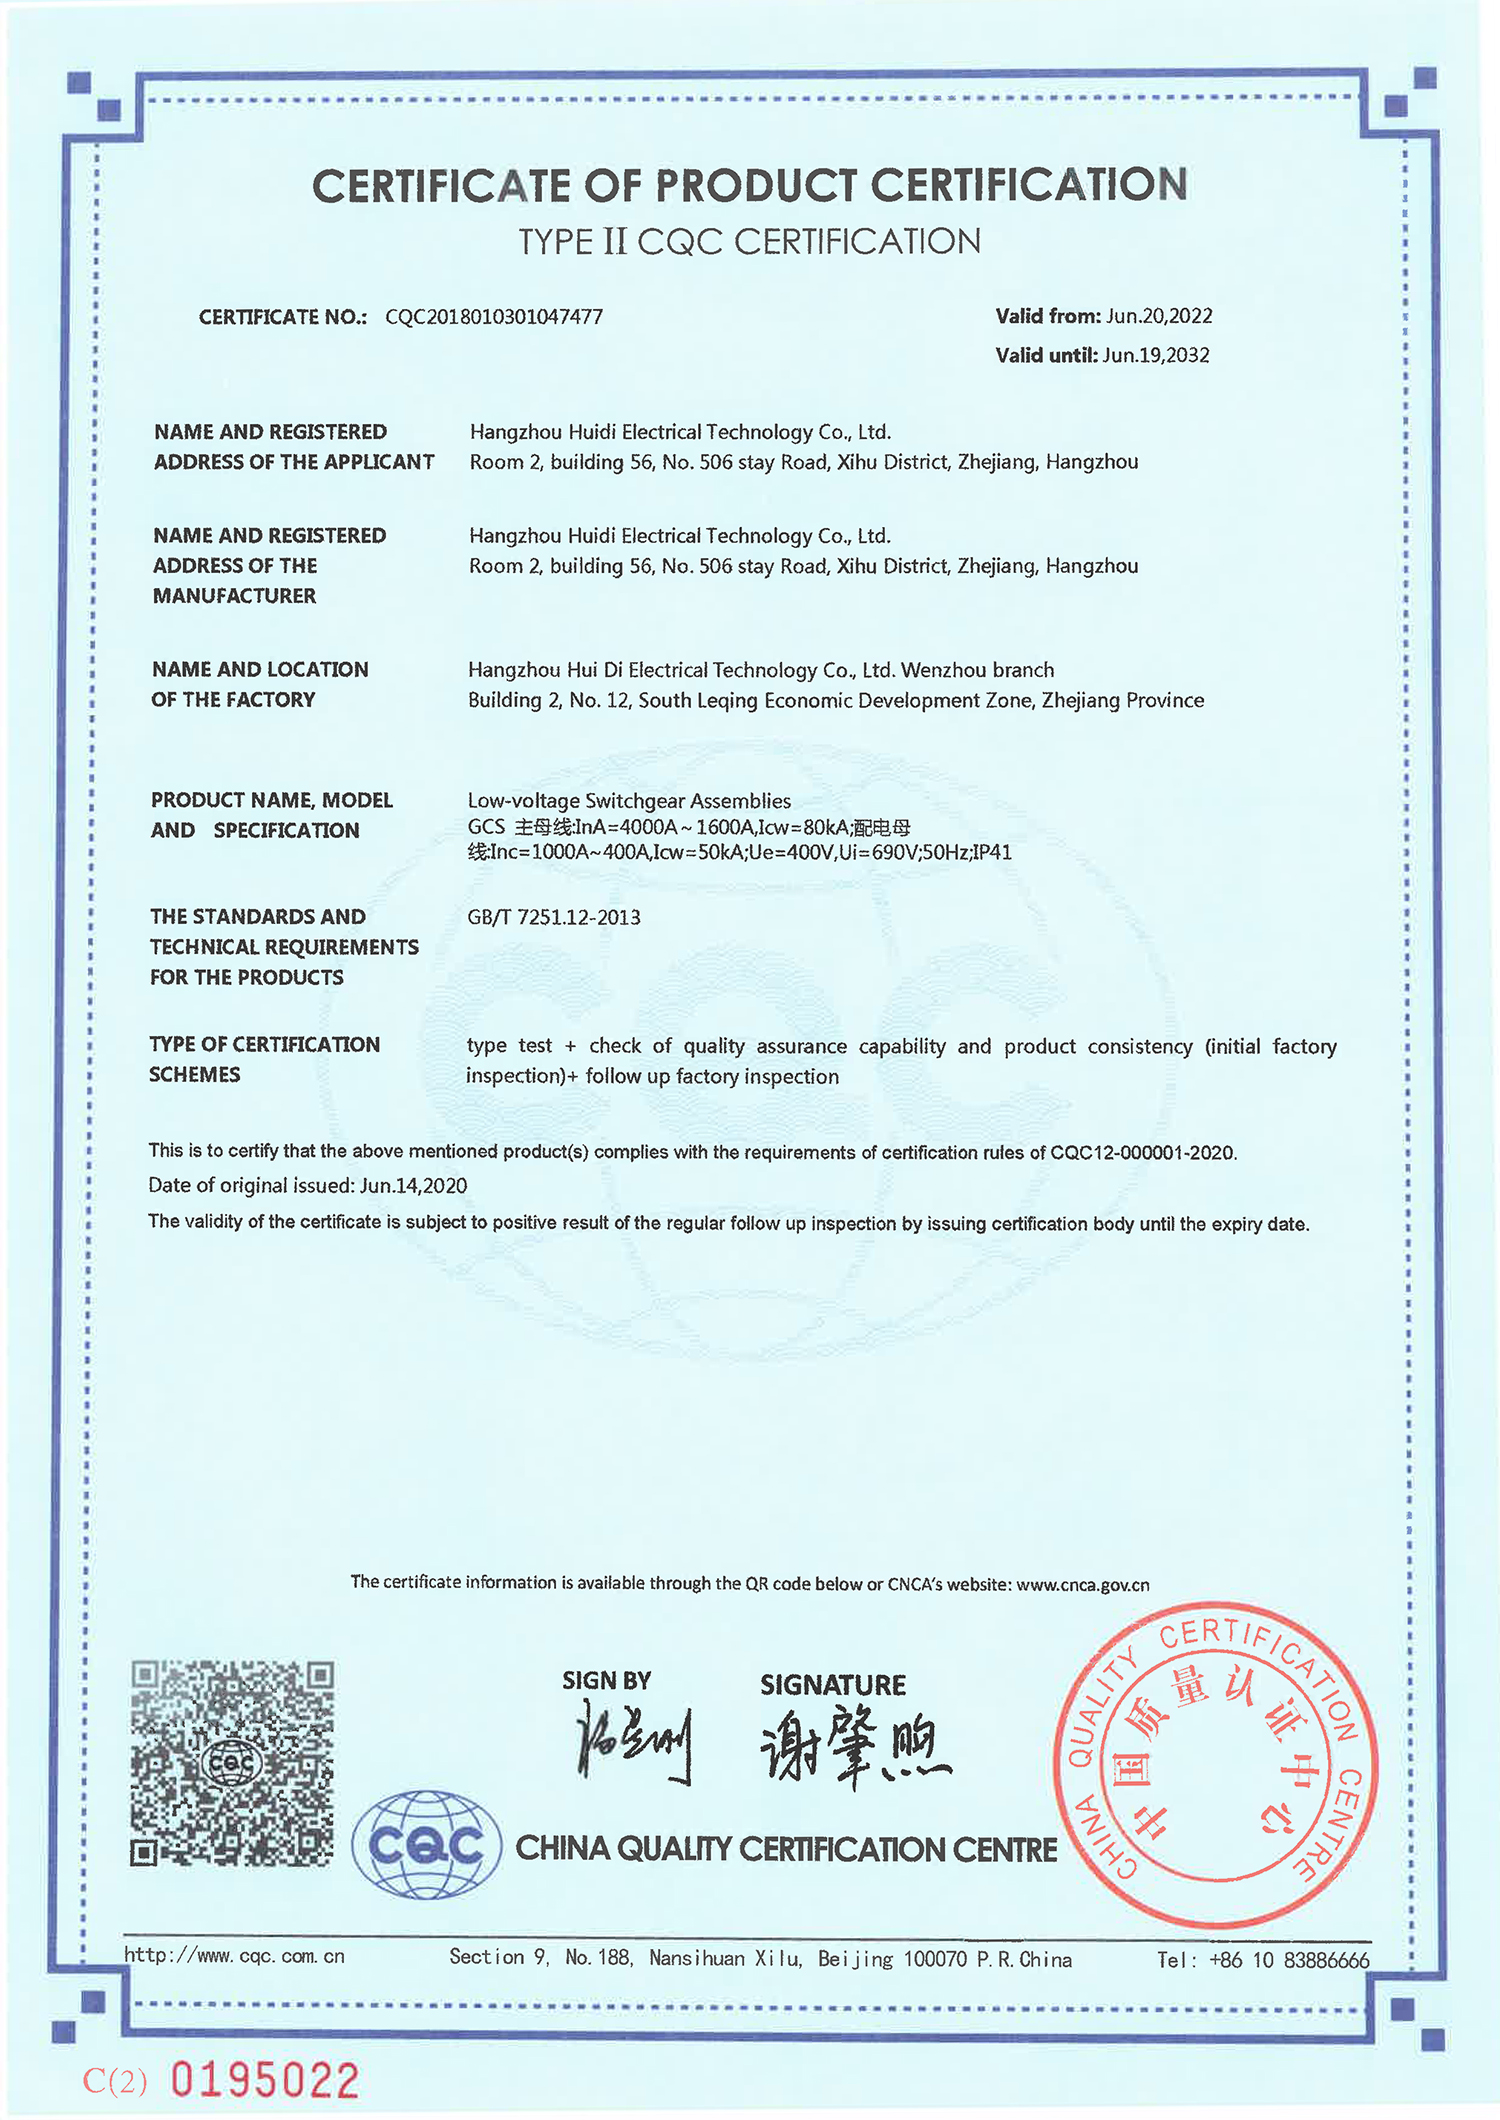 huud certificate 6